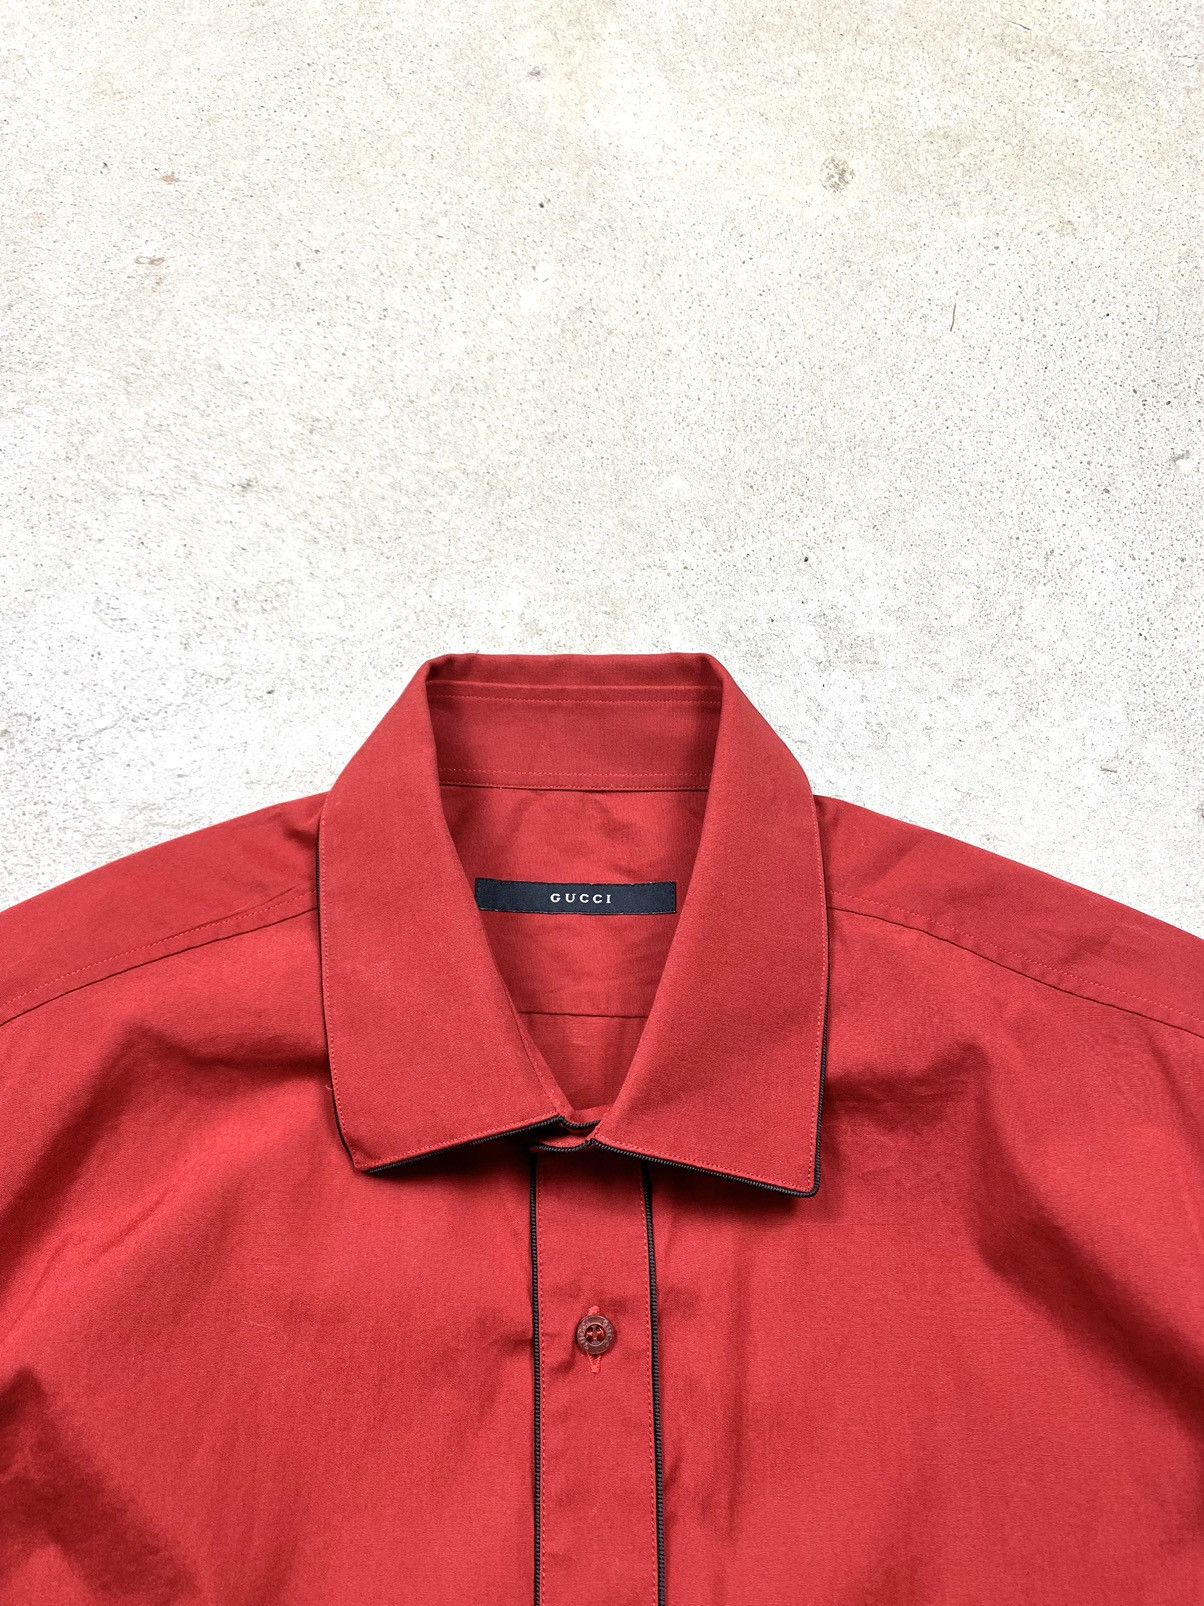 Gucci Gucci Red Shirt Button Up Luxury Designer Size US L / EU 52-54 / 3 - 4 Thumbnail